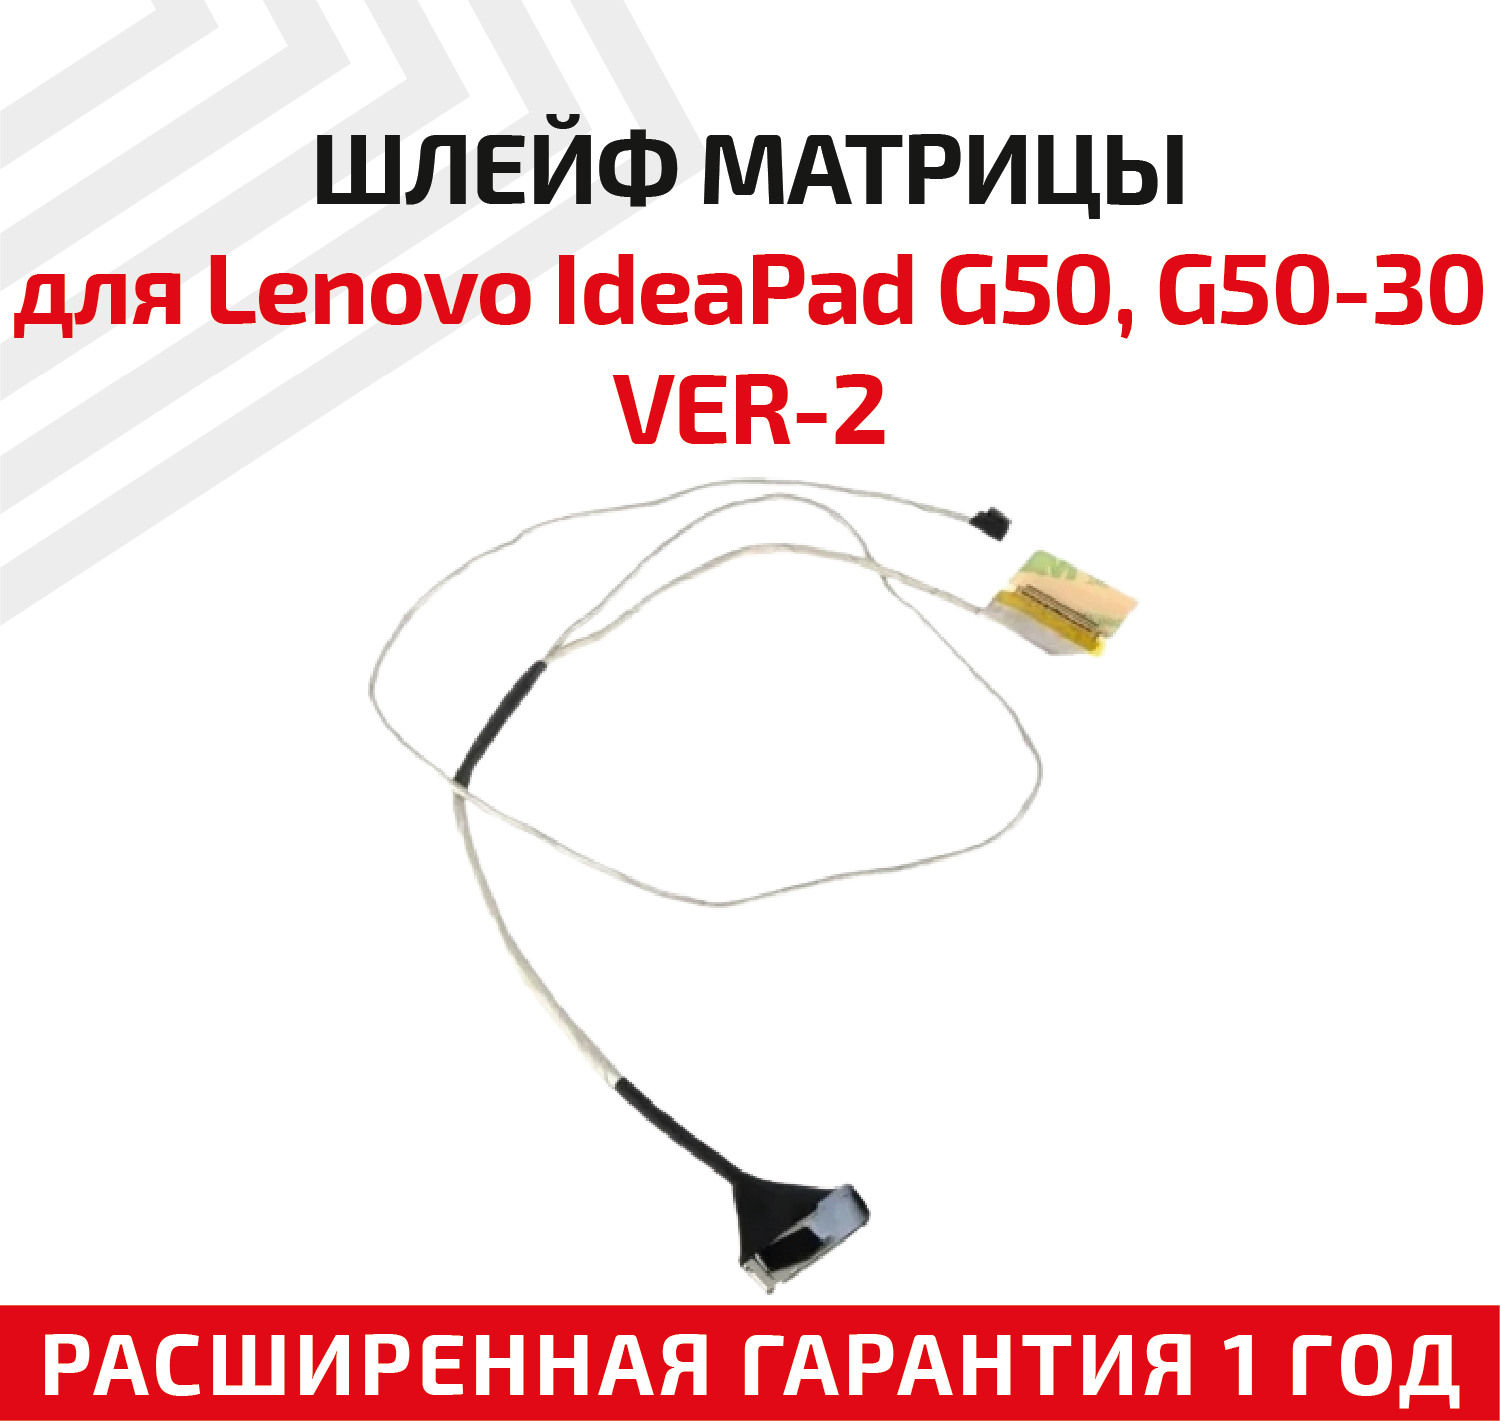 Шлейф матрицы для ноутбука Lenovo IdeaPad G50, G50-30, G50-45, G50-70, G50-75, Z50, Z50-45, Z50-70, ver.2